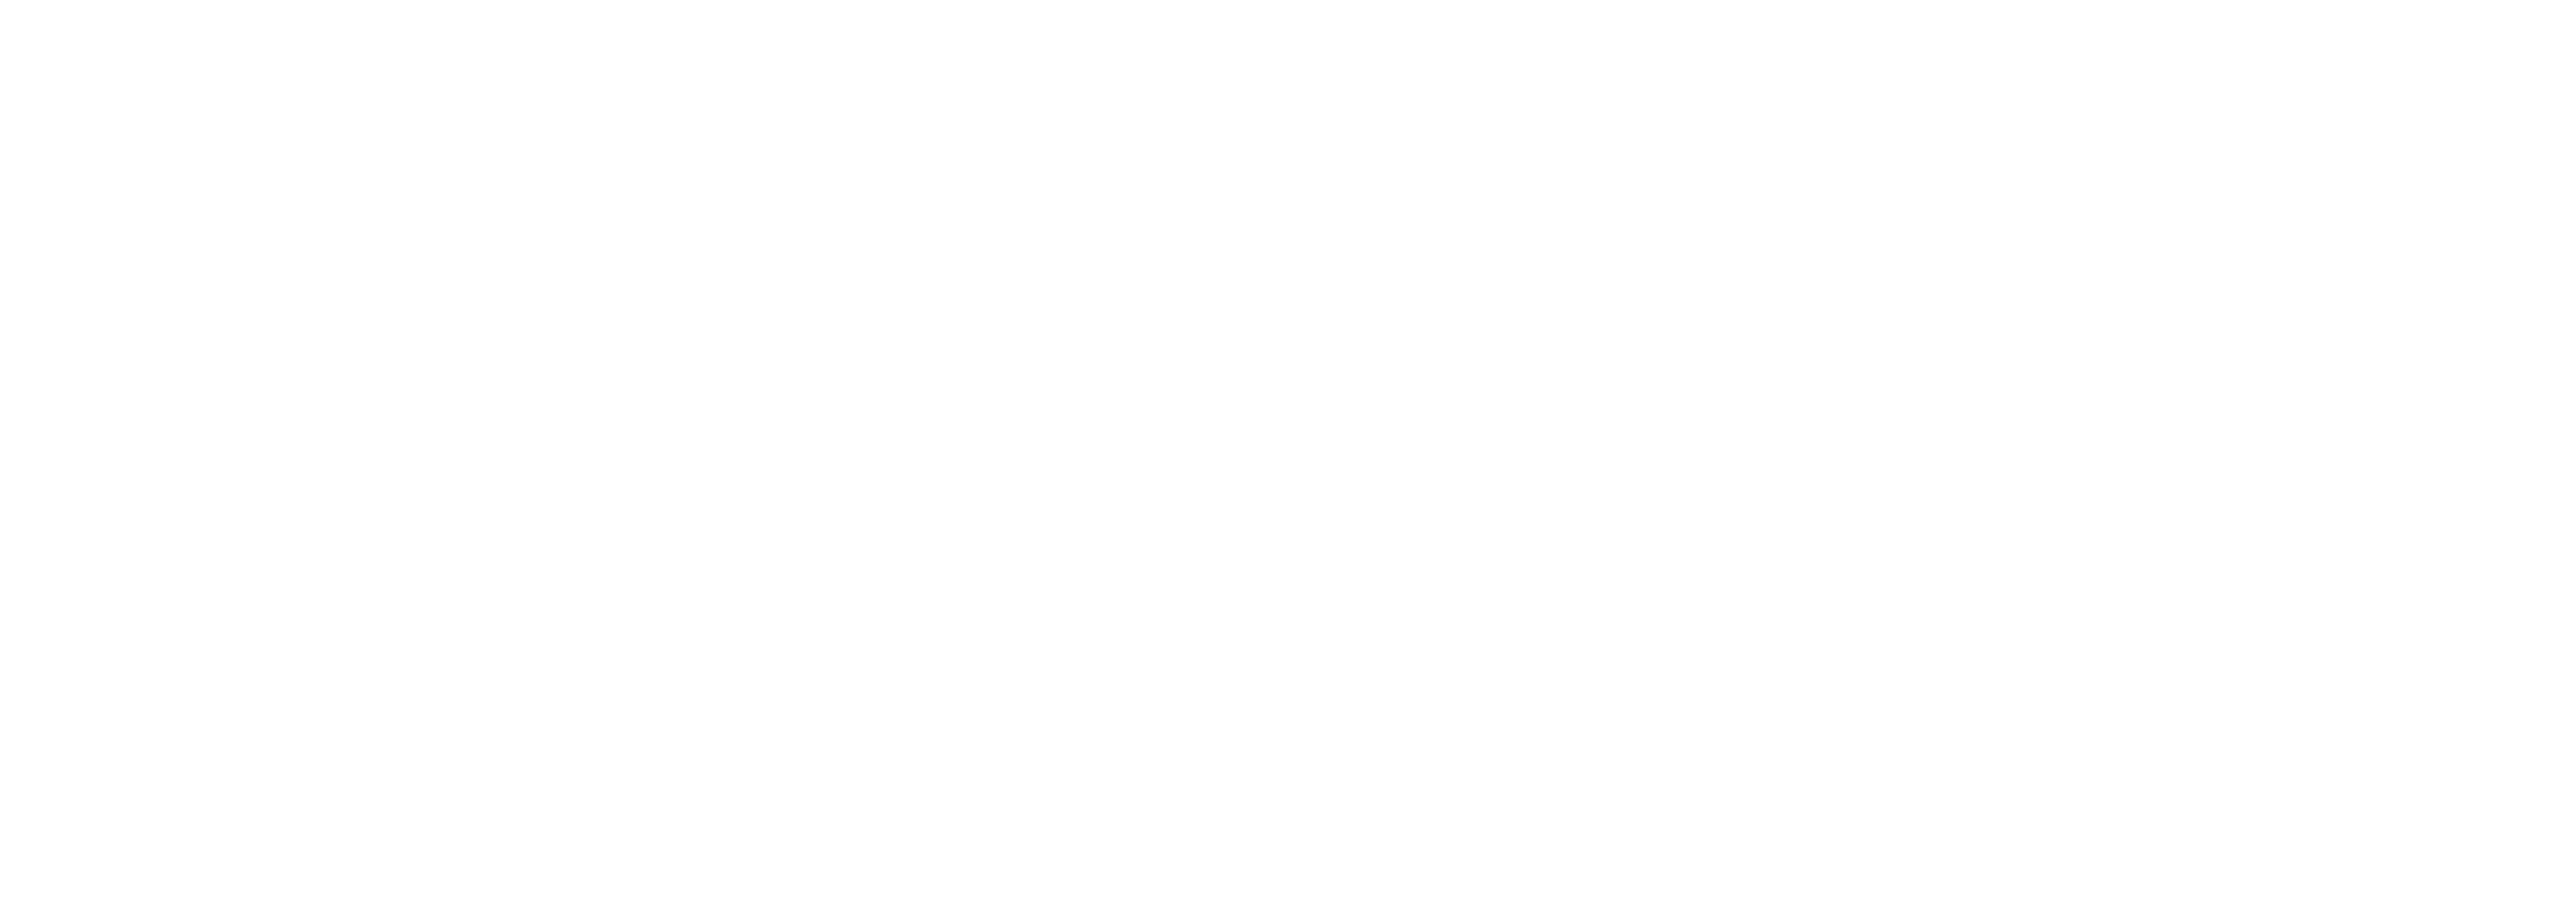 ZML Logo